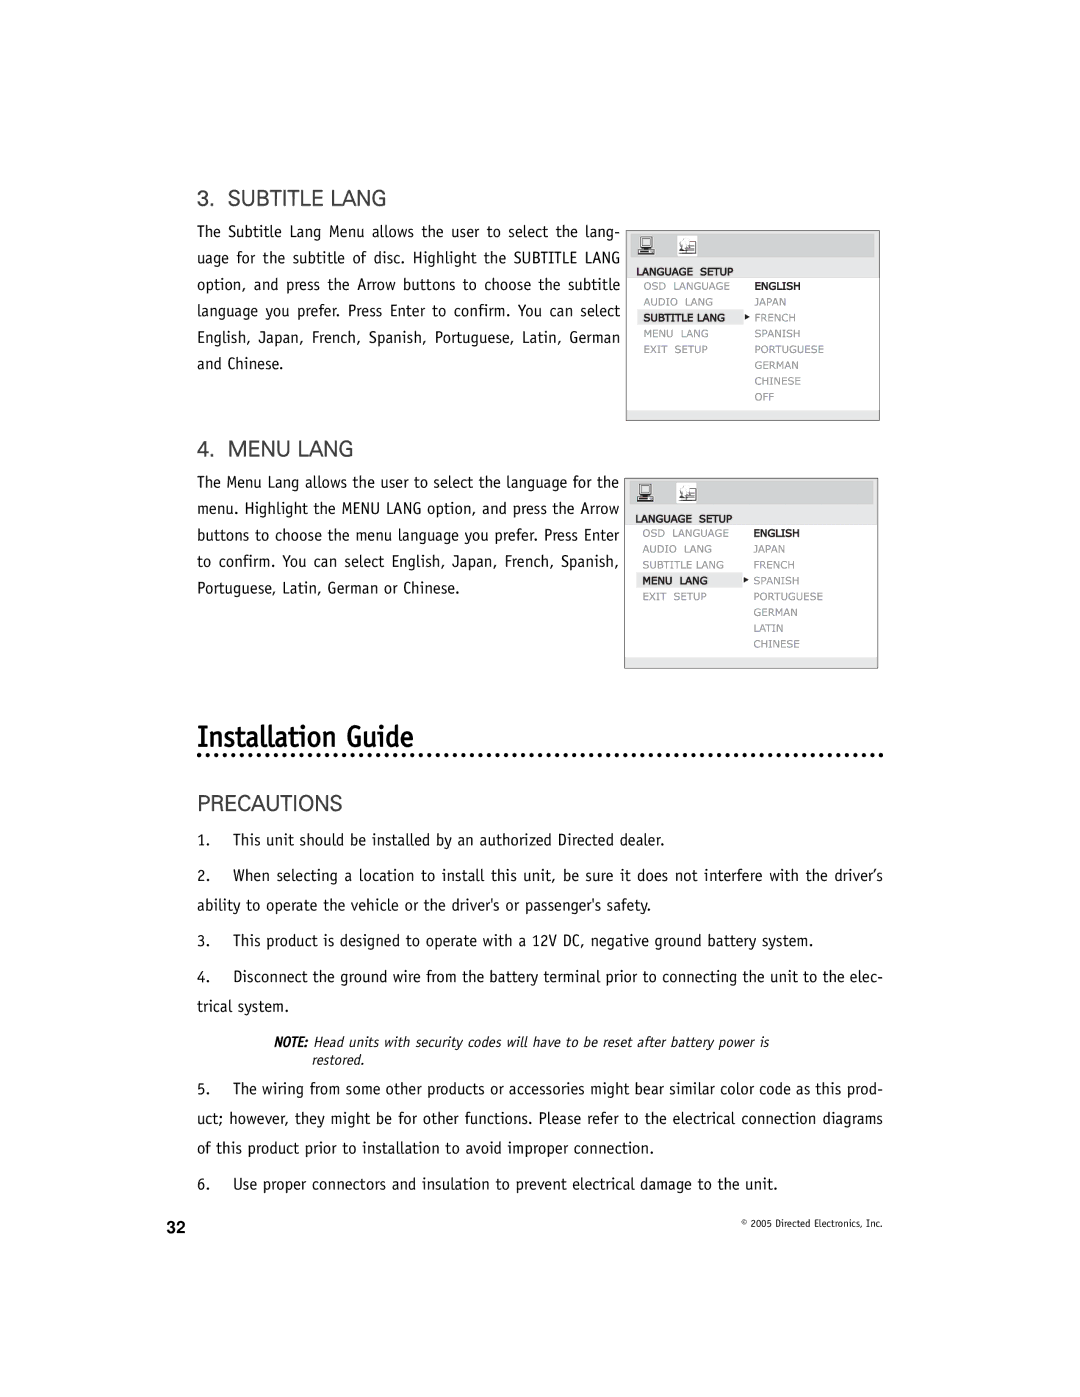 Directed Electronics OHD901A manual Installation Guide, Subtitle Lang, Menu Lang 